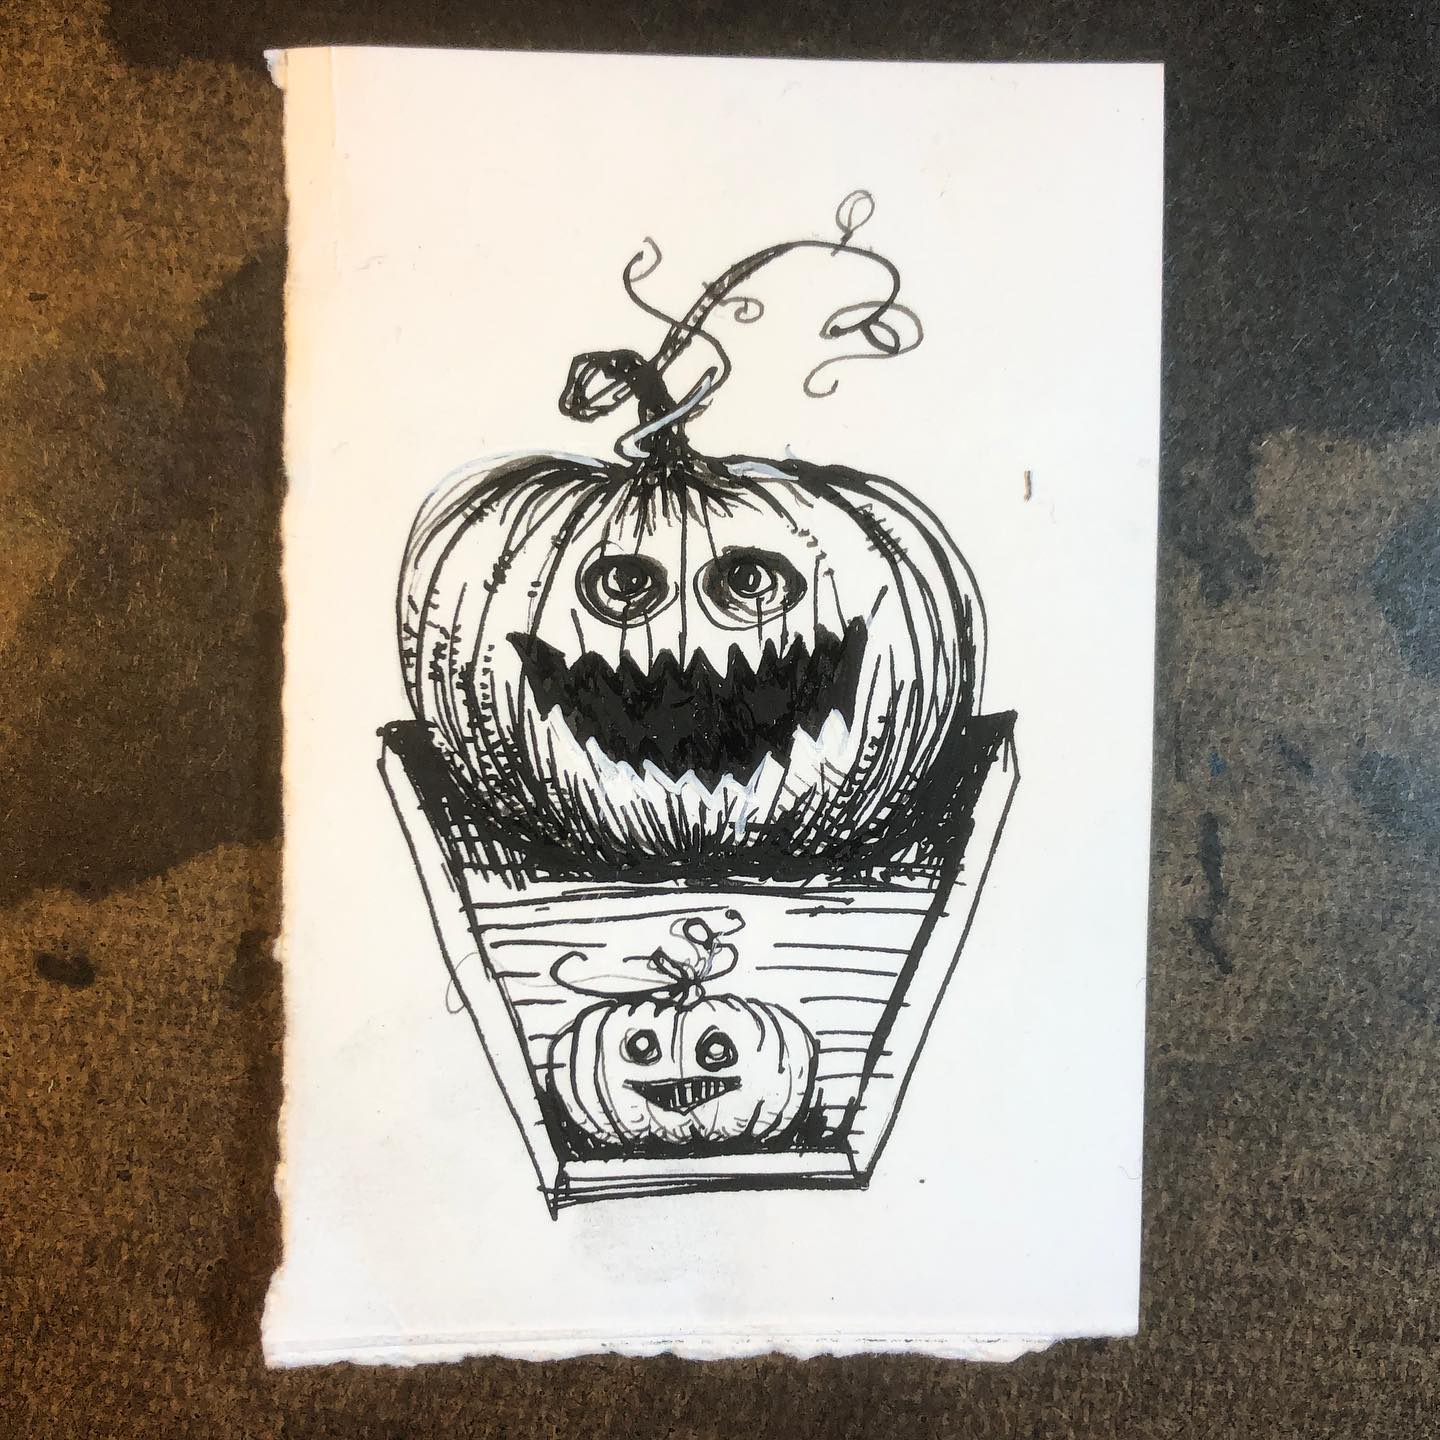 Ink Drawing - "Halloween"